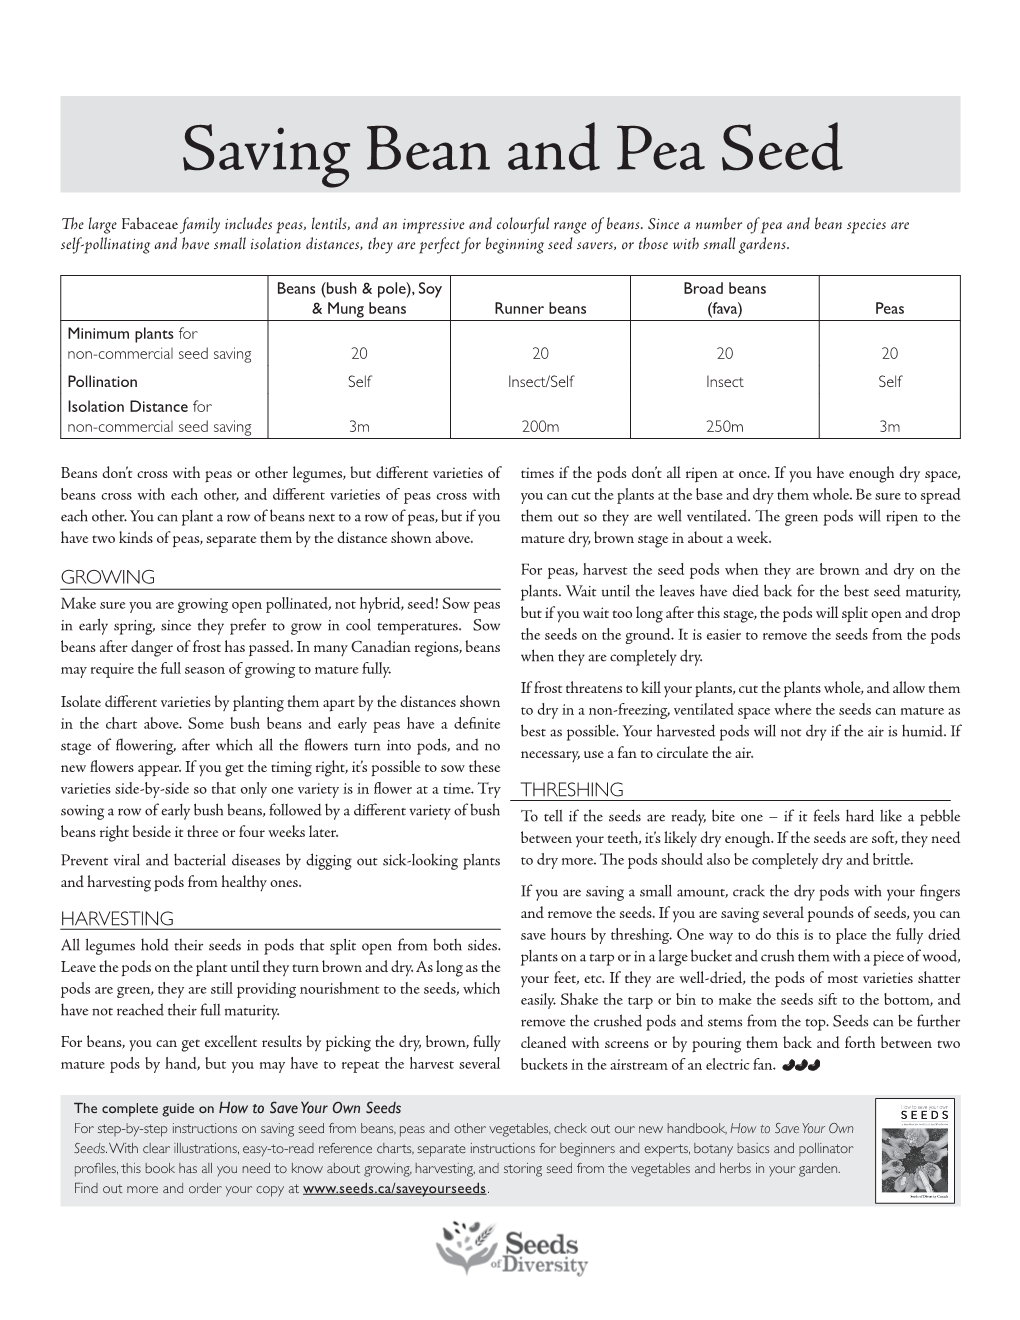 Saving Pea & Bean Seeds